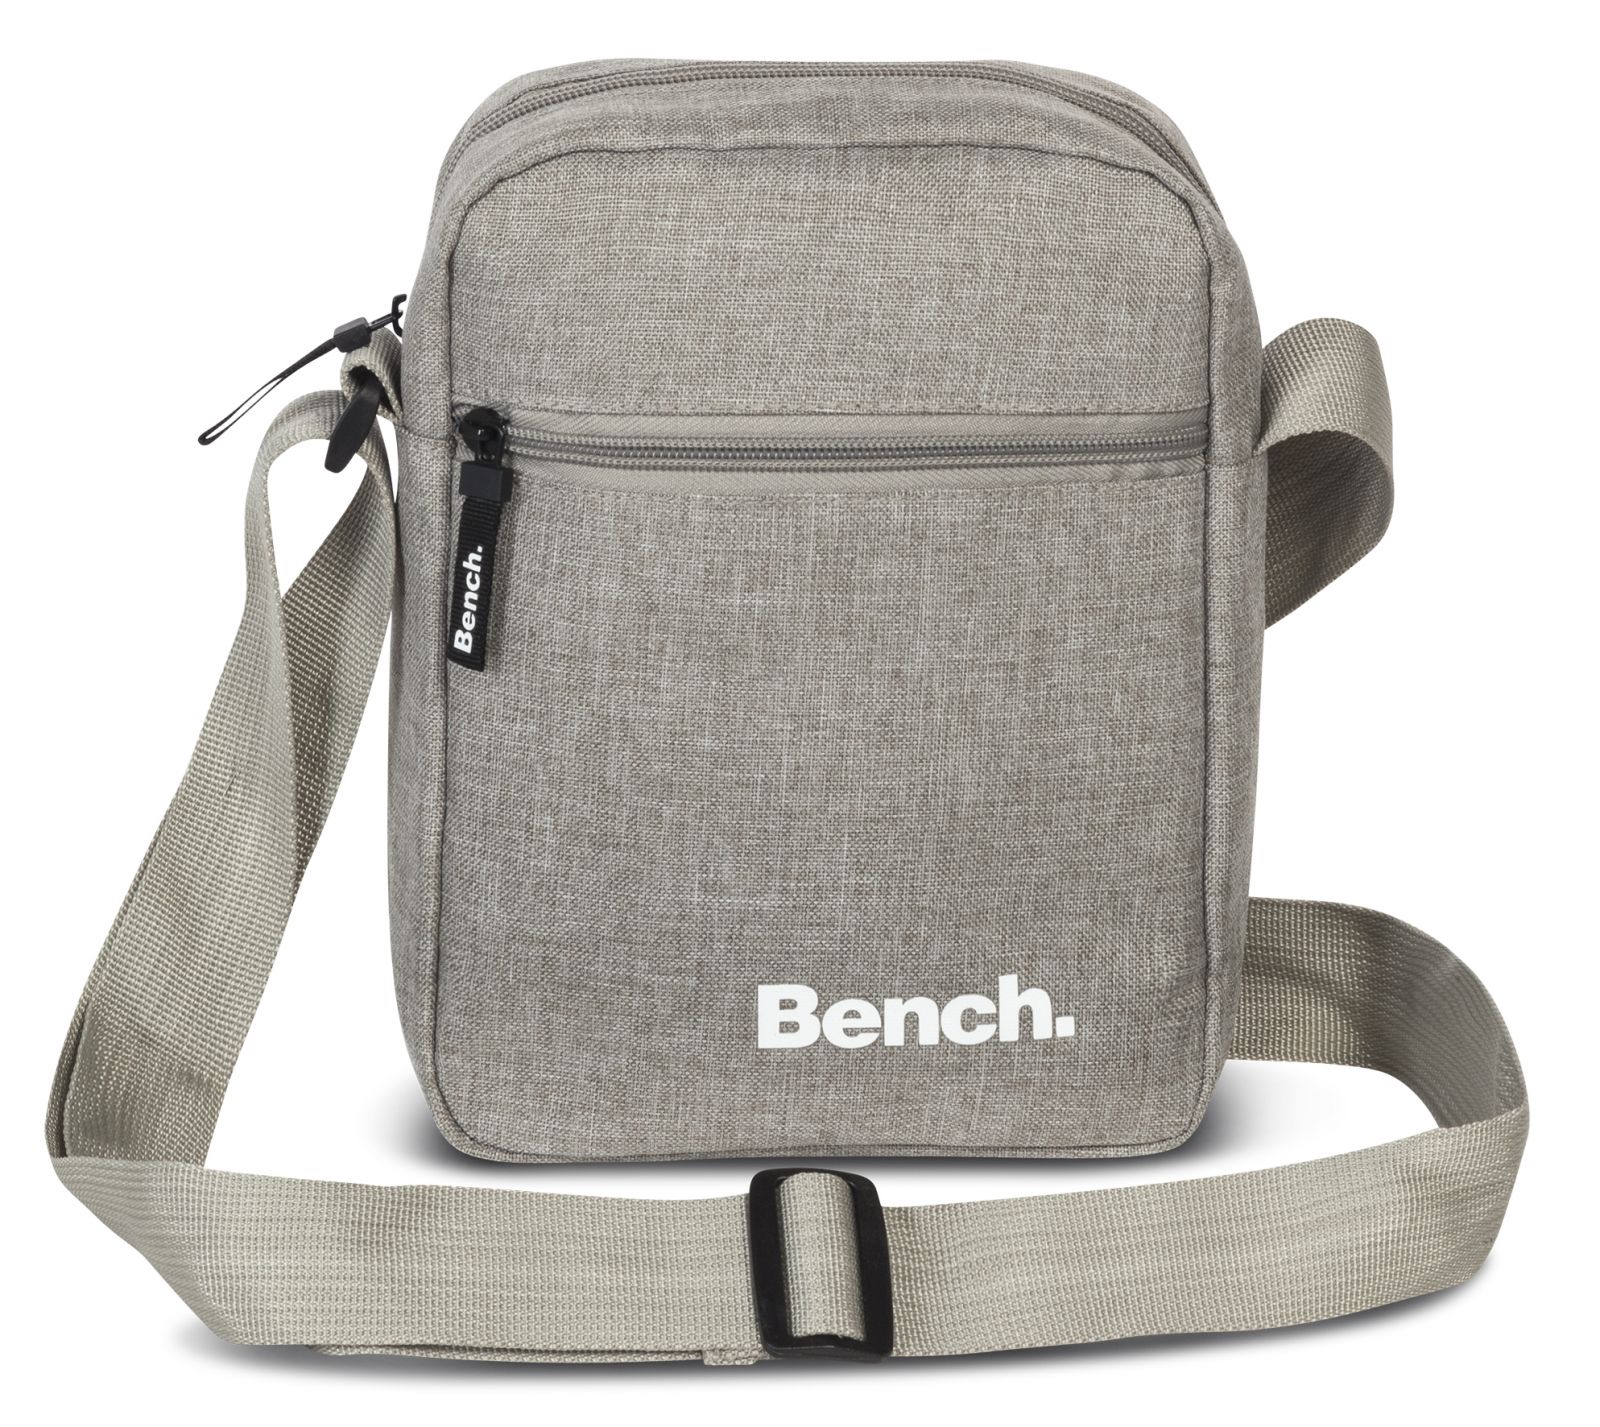 Bench - messenger CLASSiC light grey 64153-2800